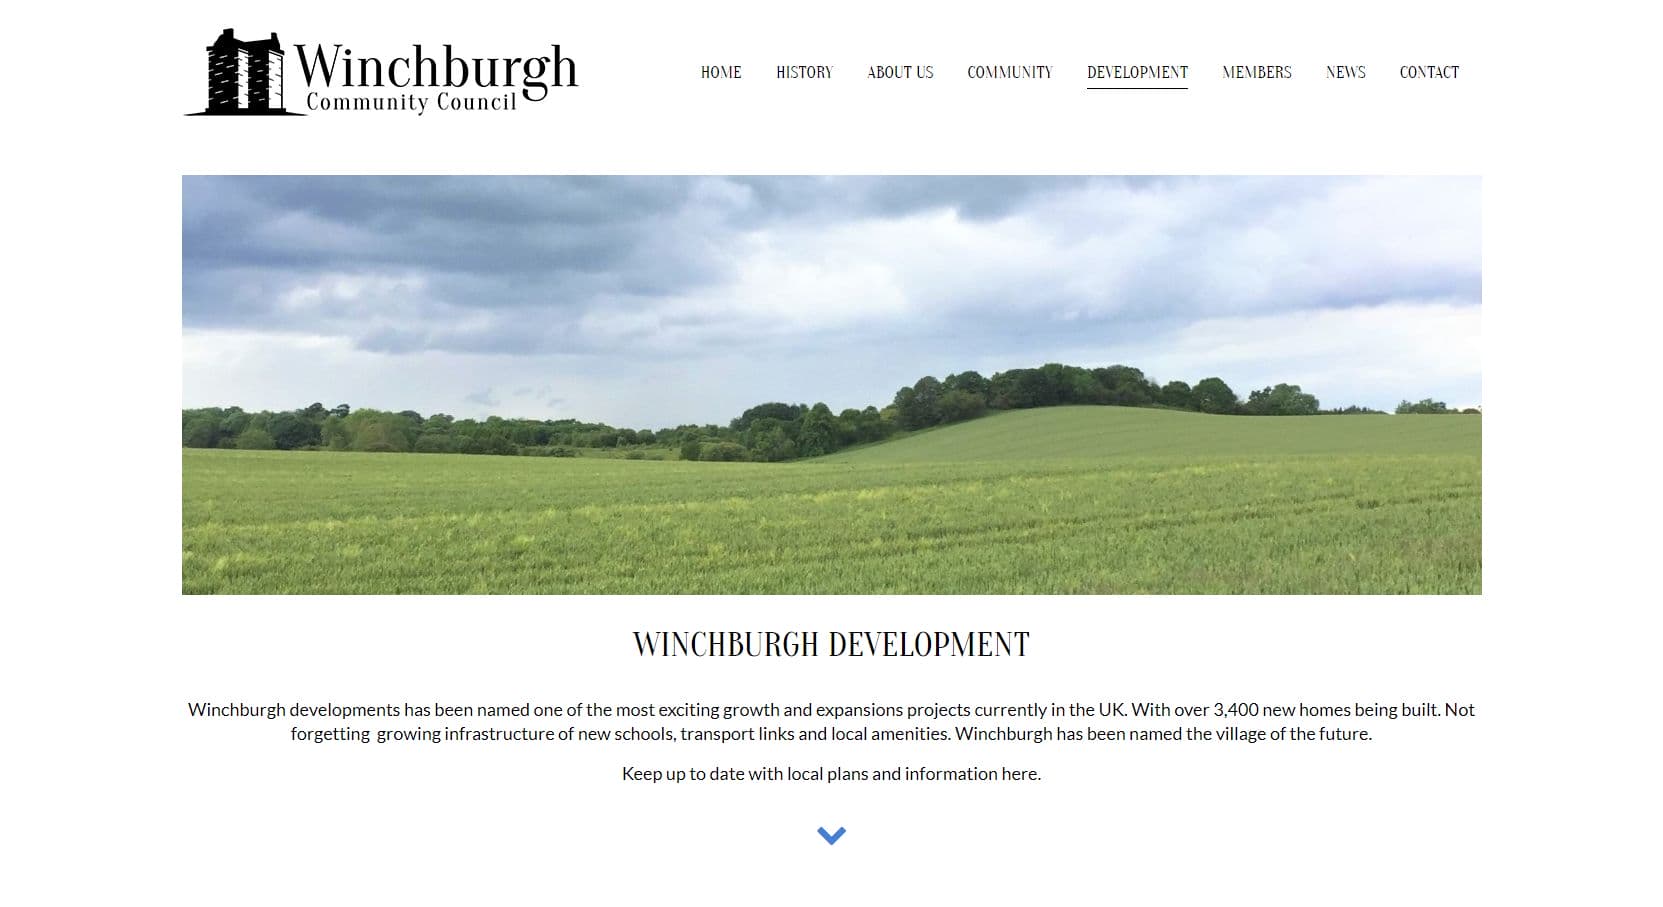 Winchburgh Community Council Development